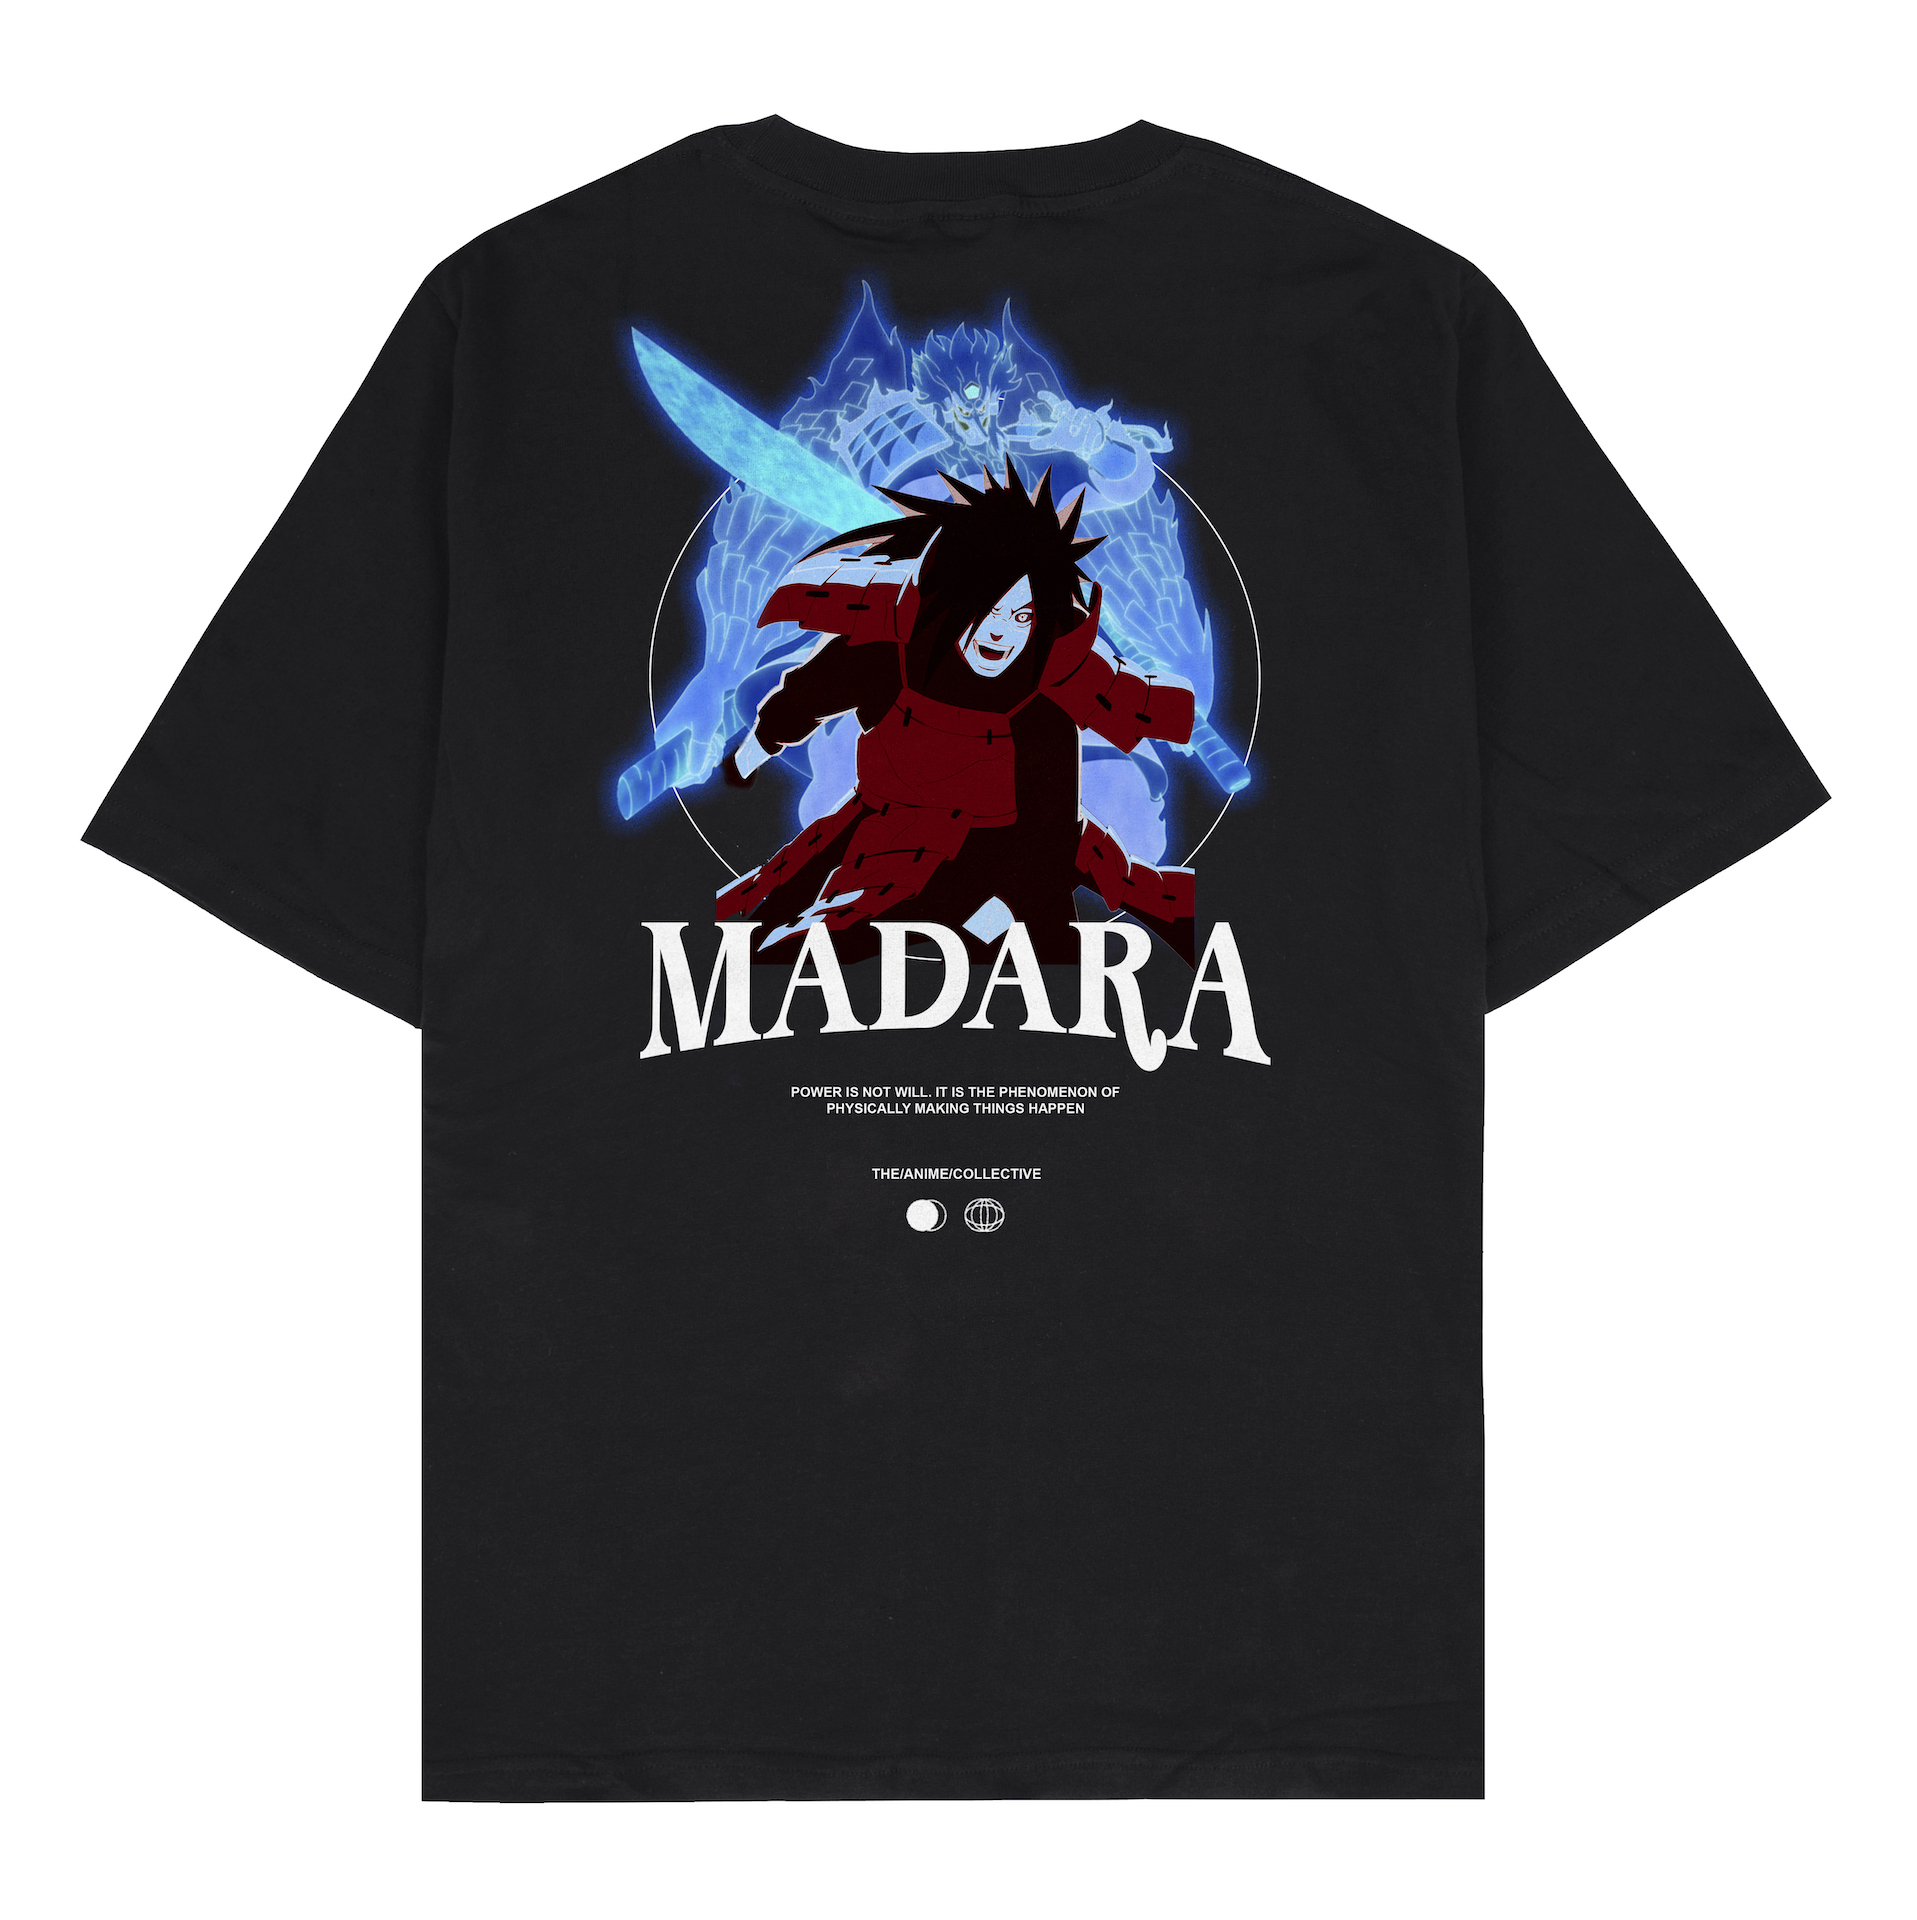 Uchiha Madara "Power" T-Shirt | Naruto Shippuden